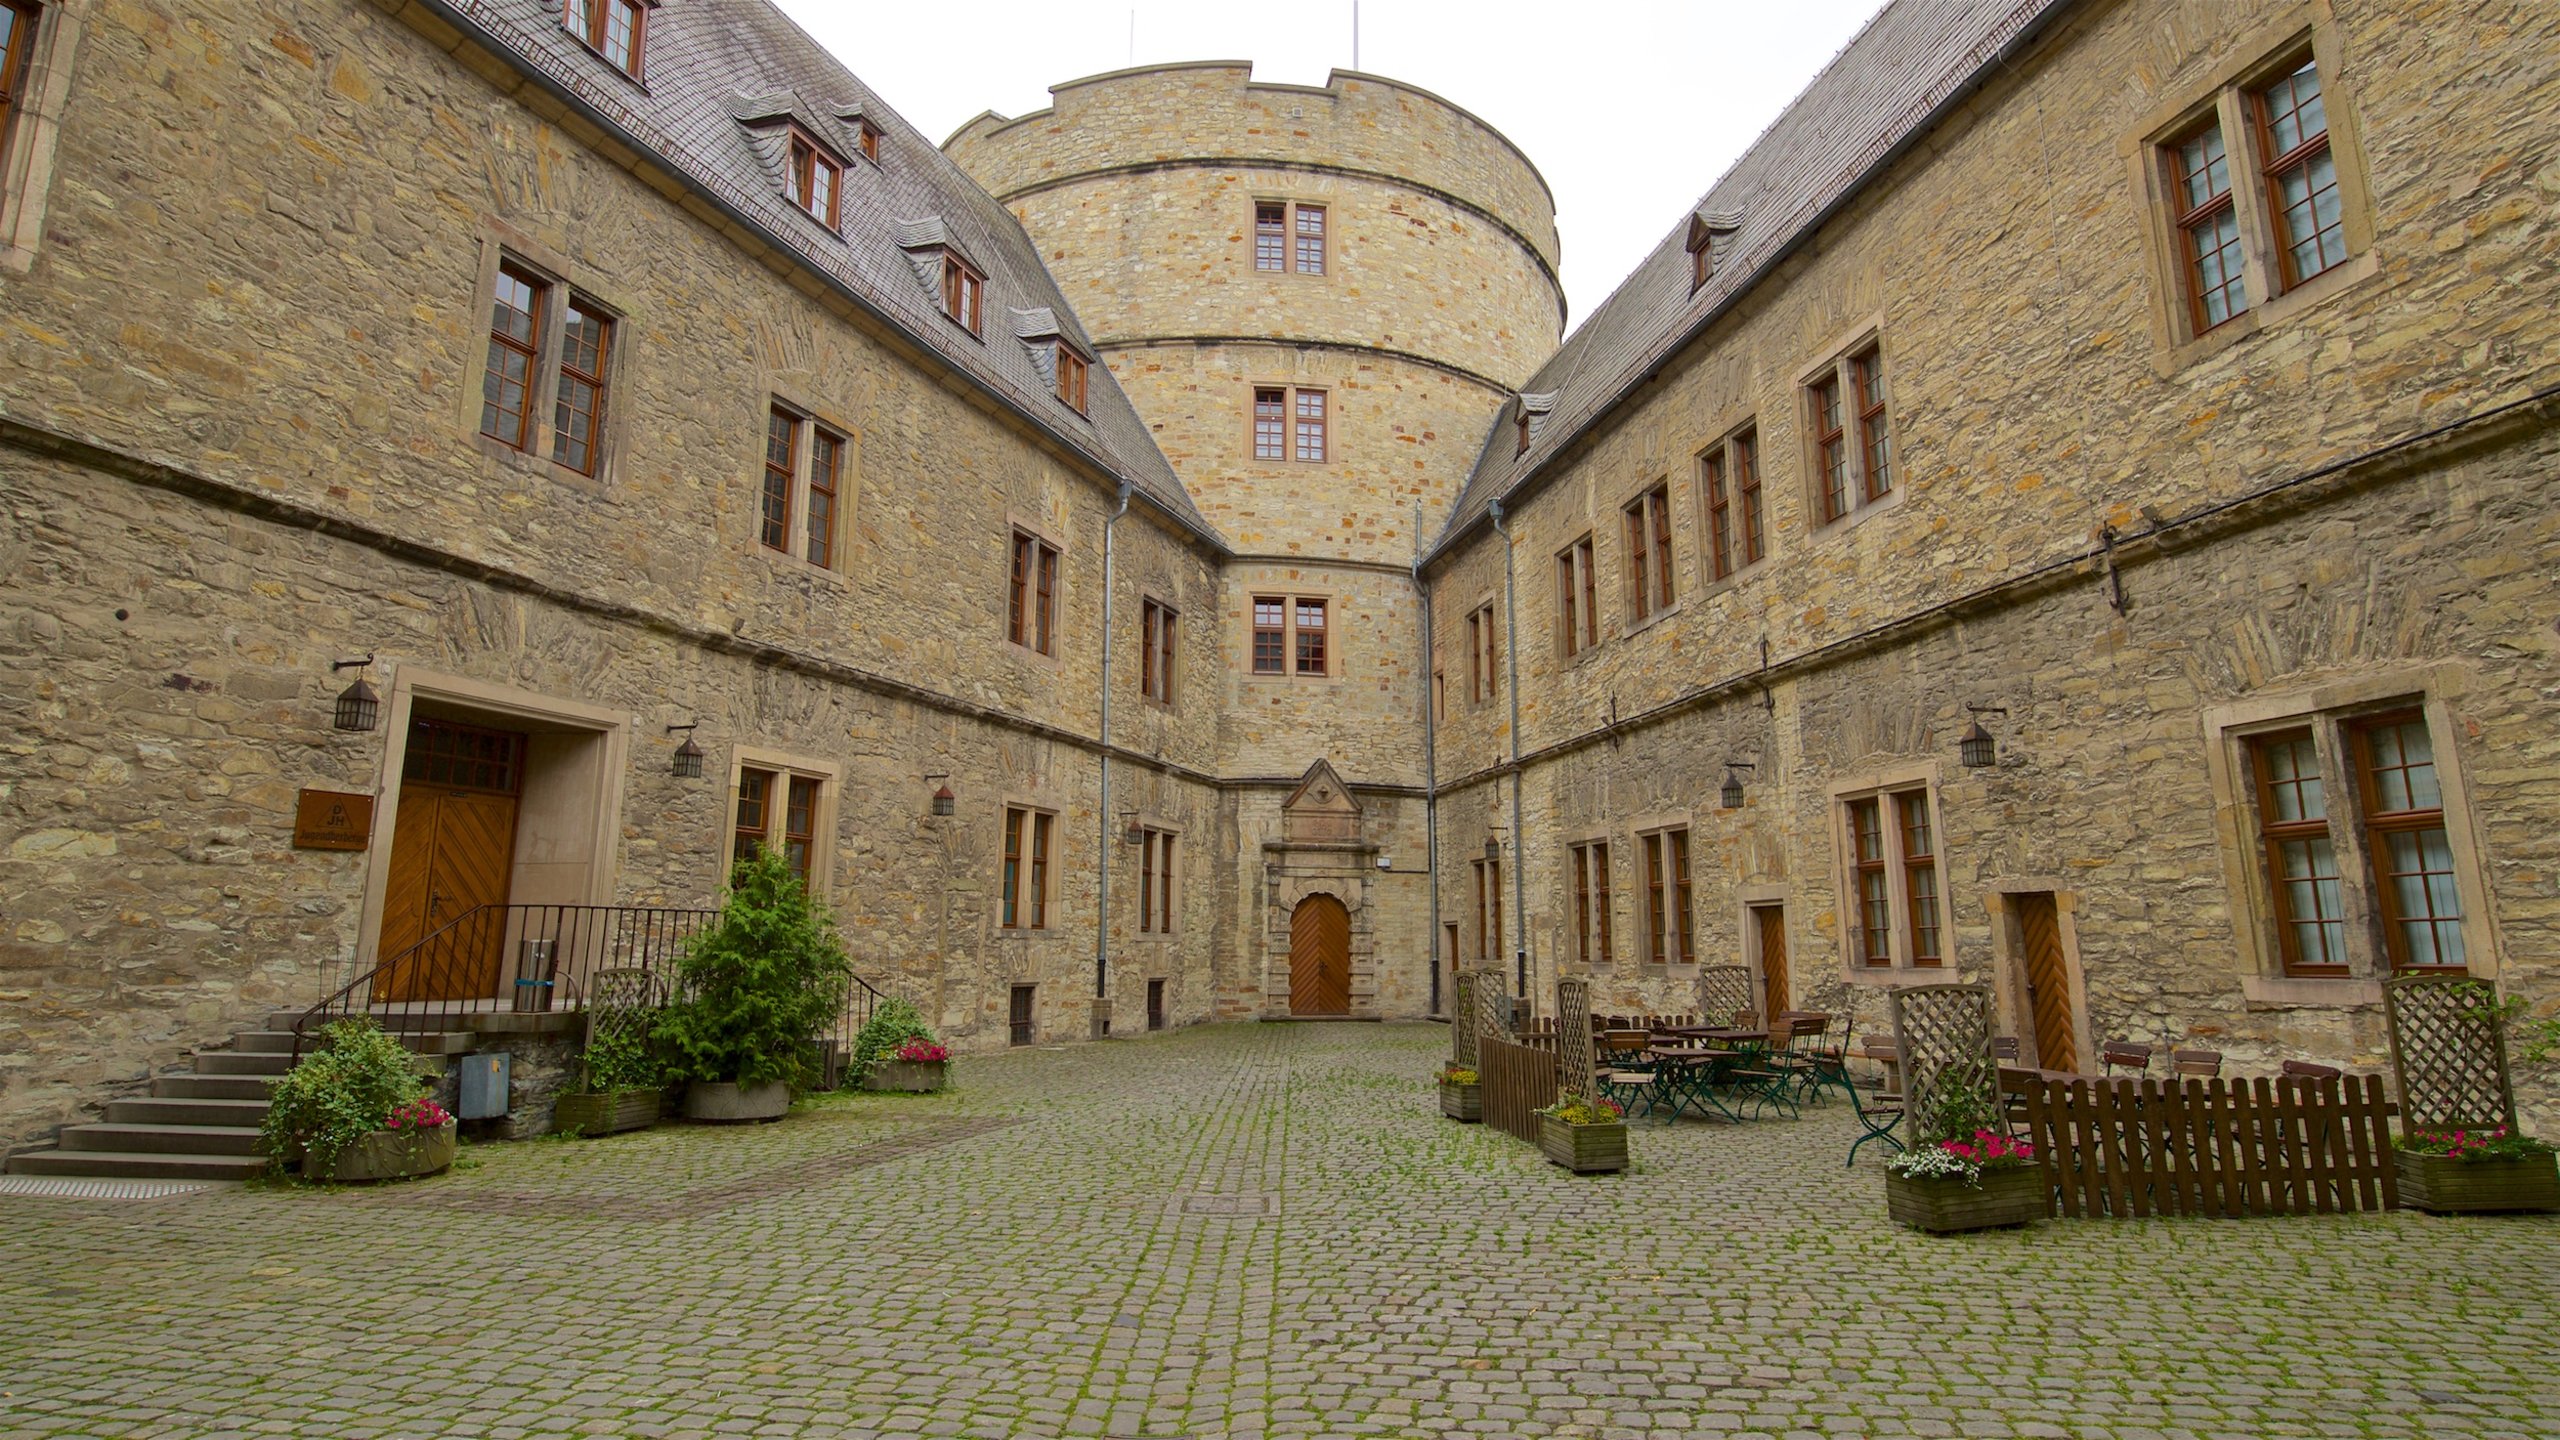 Wewelsburg Castle - Germany